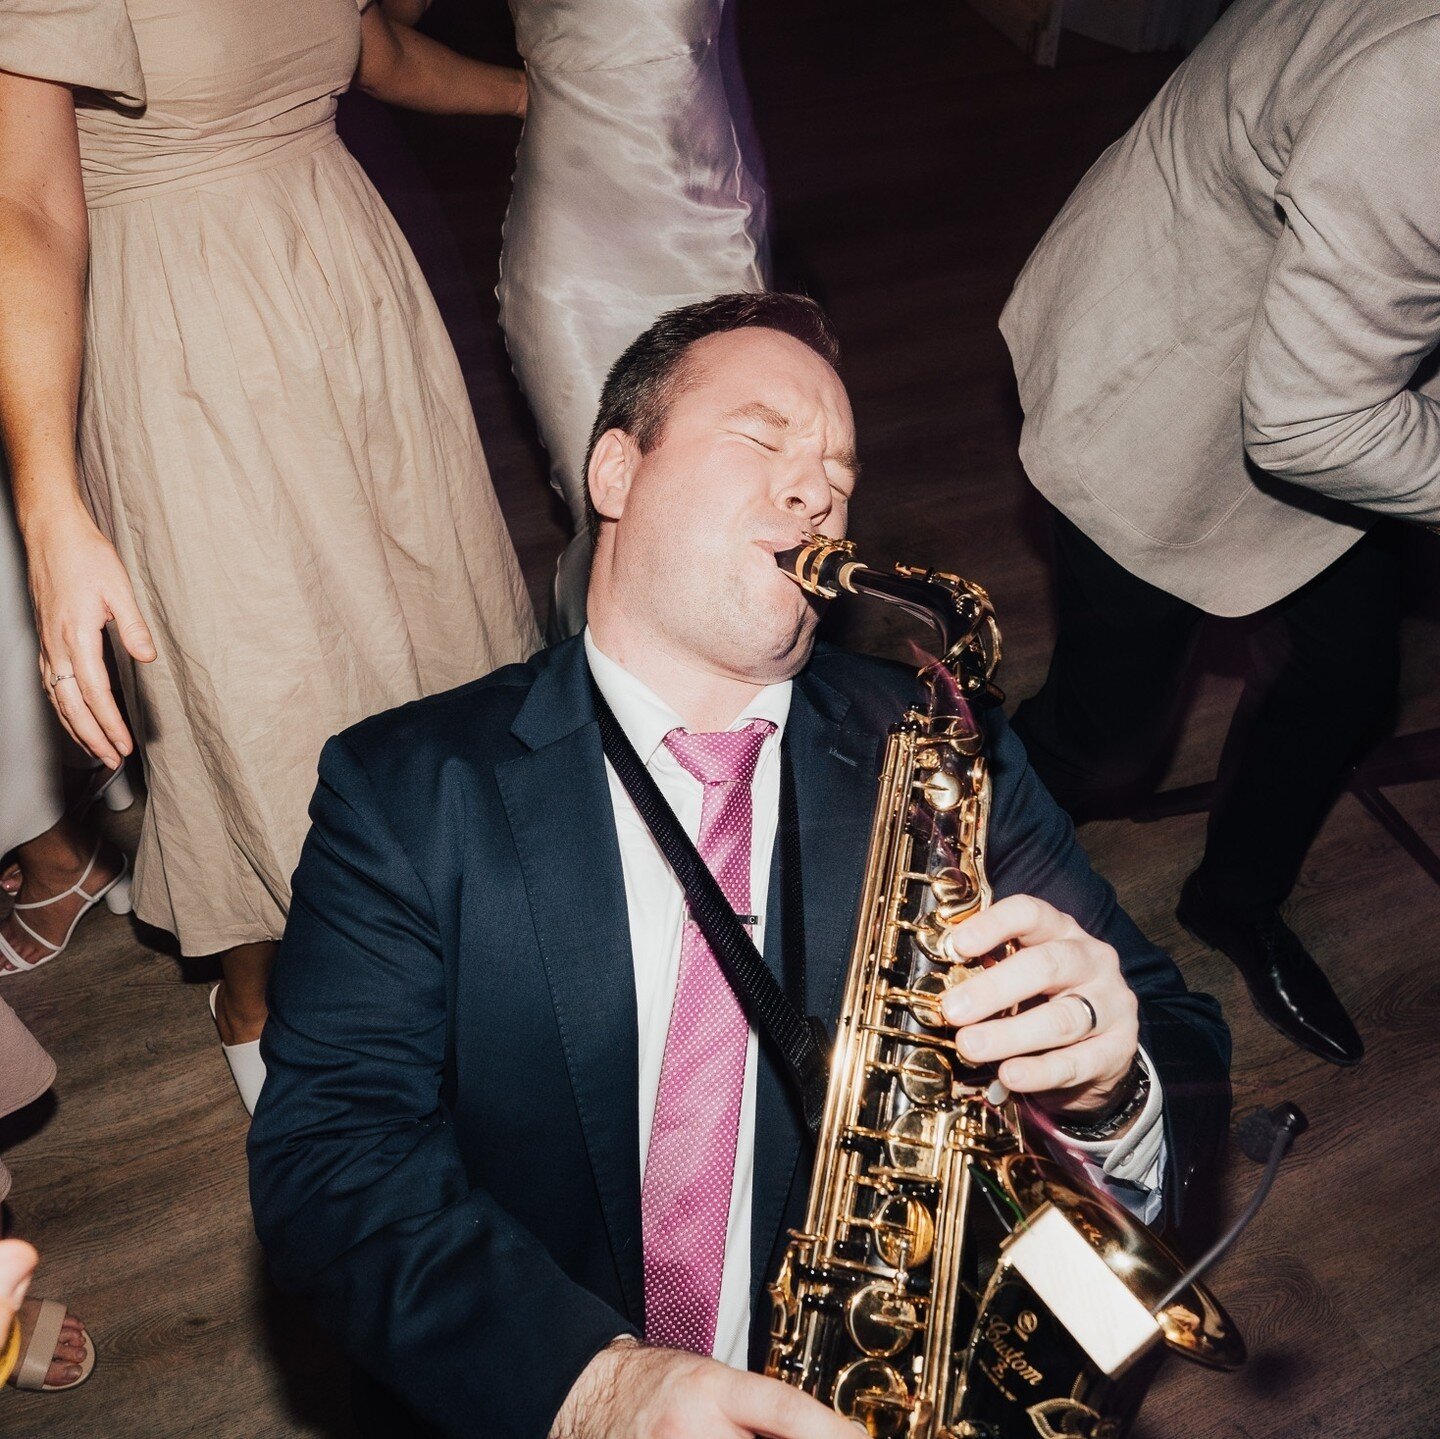 Action shot of me tearing it up on the d'floor with my sax! Featuring the awesome work of @rick_liston and his stealthy camera skills! 📸⁠
⁠
📍 @immerseyv⁠
⁠
#djtrumpet #djsaxwedding #djsaxophone #partydj #djaustralia #pioneer #weddingdj #saxdj #rece